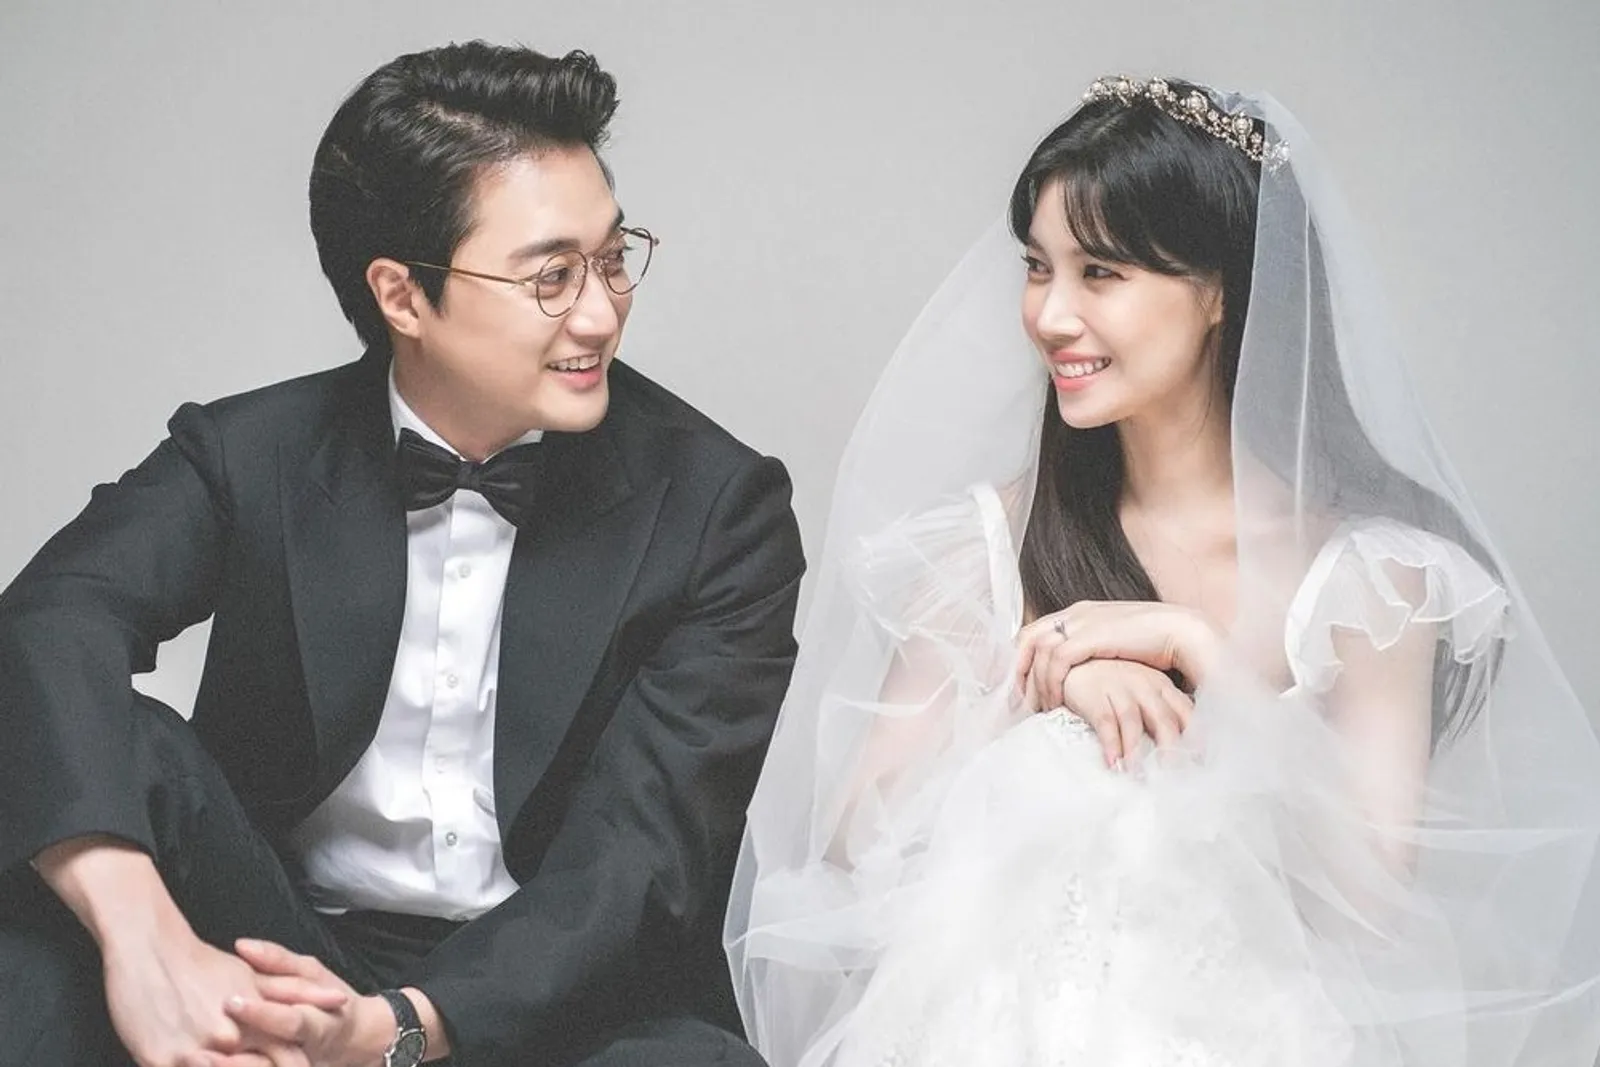 Kisah Cinta Pasangan Seleb yang Viral di Korea, Romantis & Lucu Banget